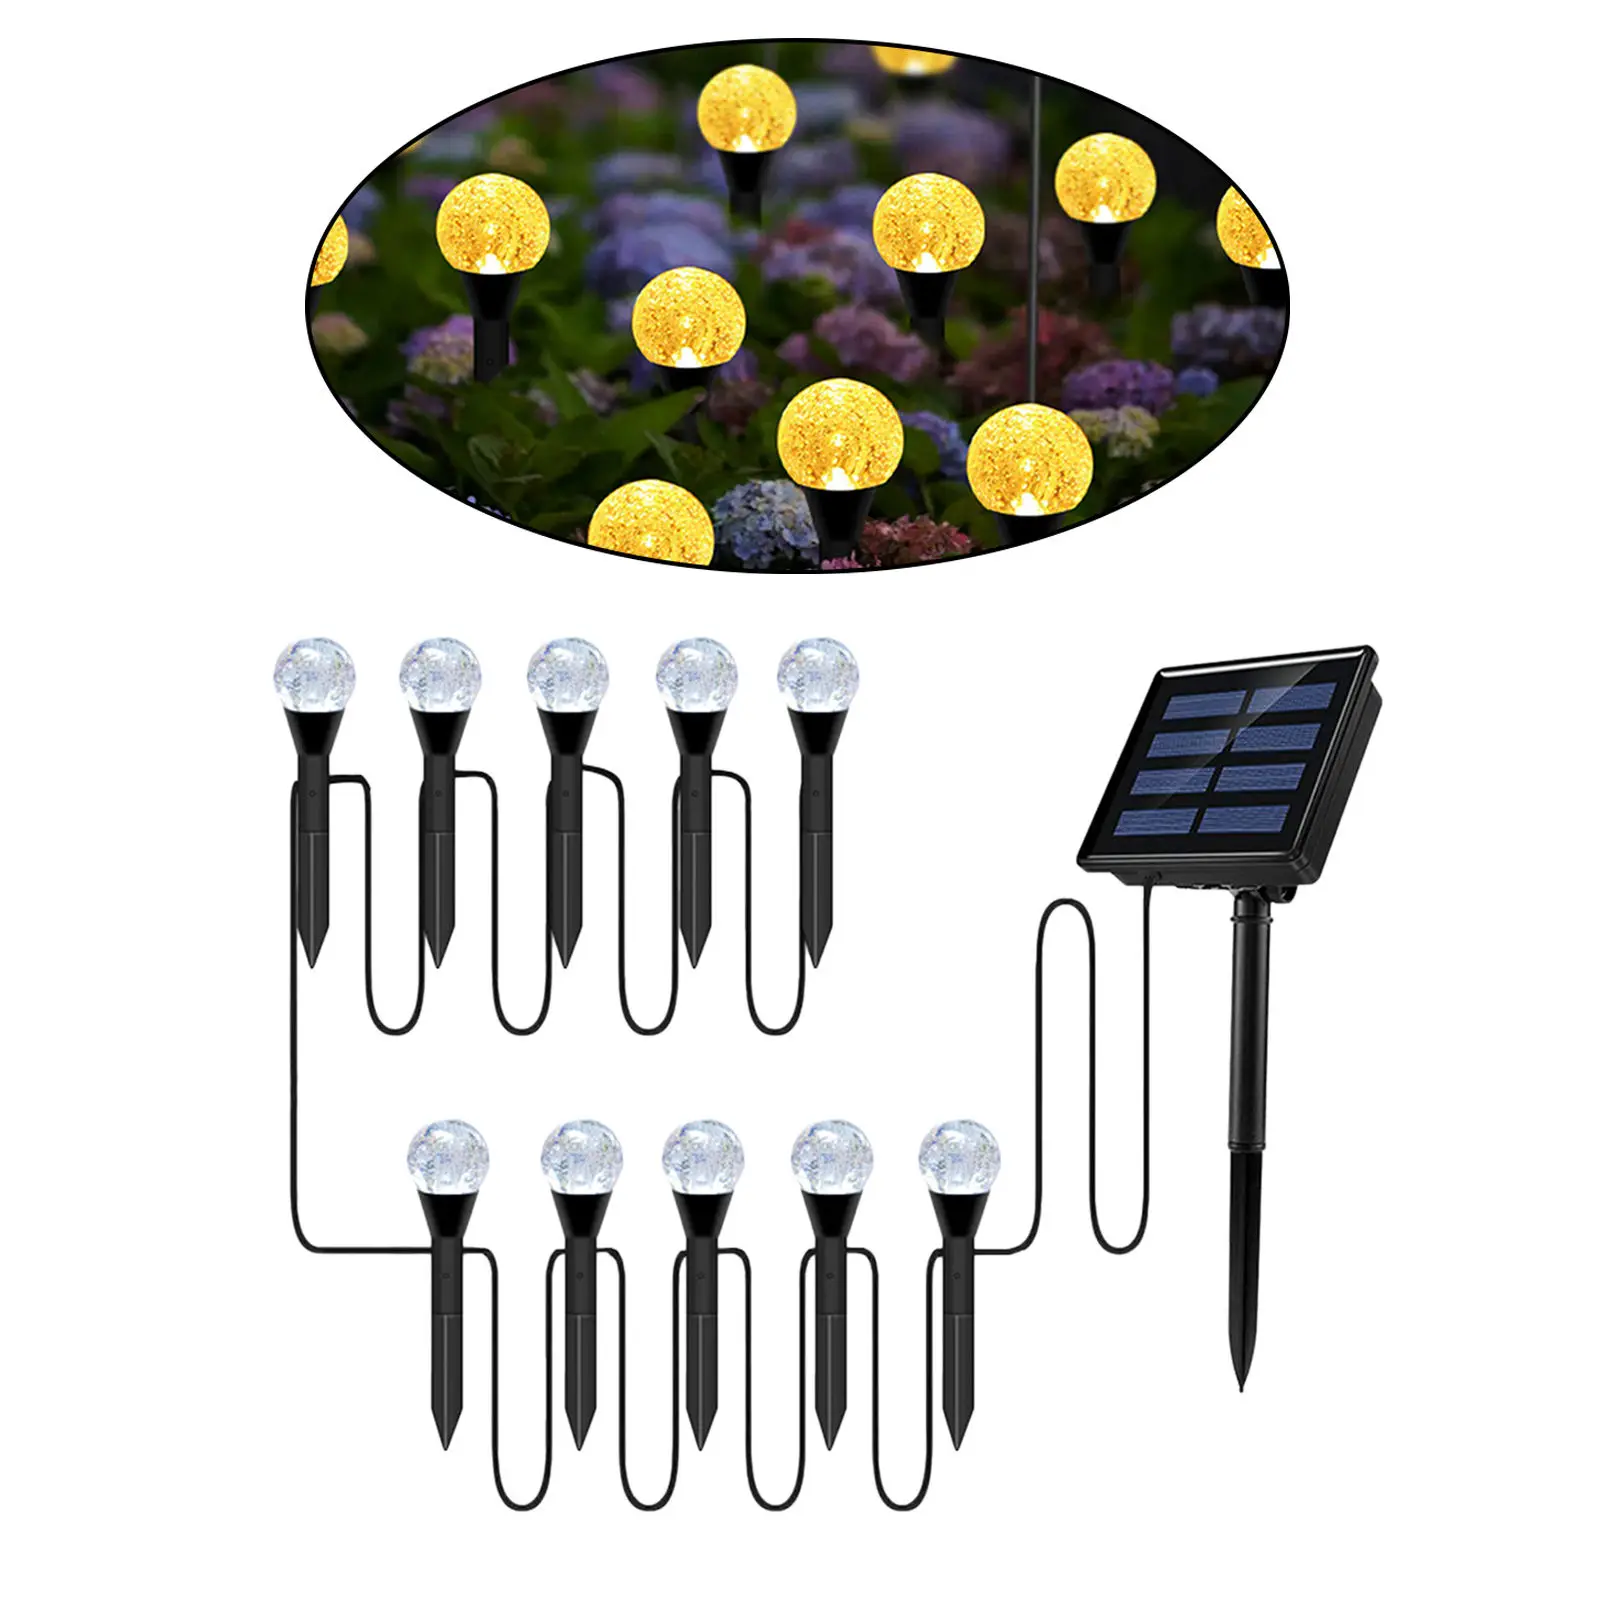 Waterproof Outdoor Solar Powered Light Garden Led Lights Garden Stake for Yard Lawn Pathway Patio Walkway Landscape